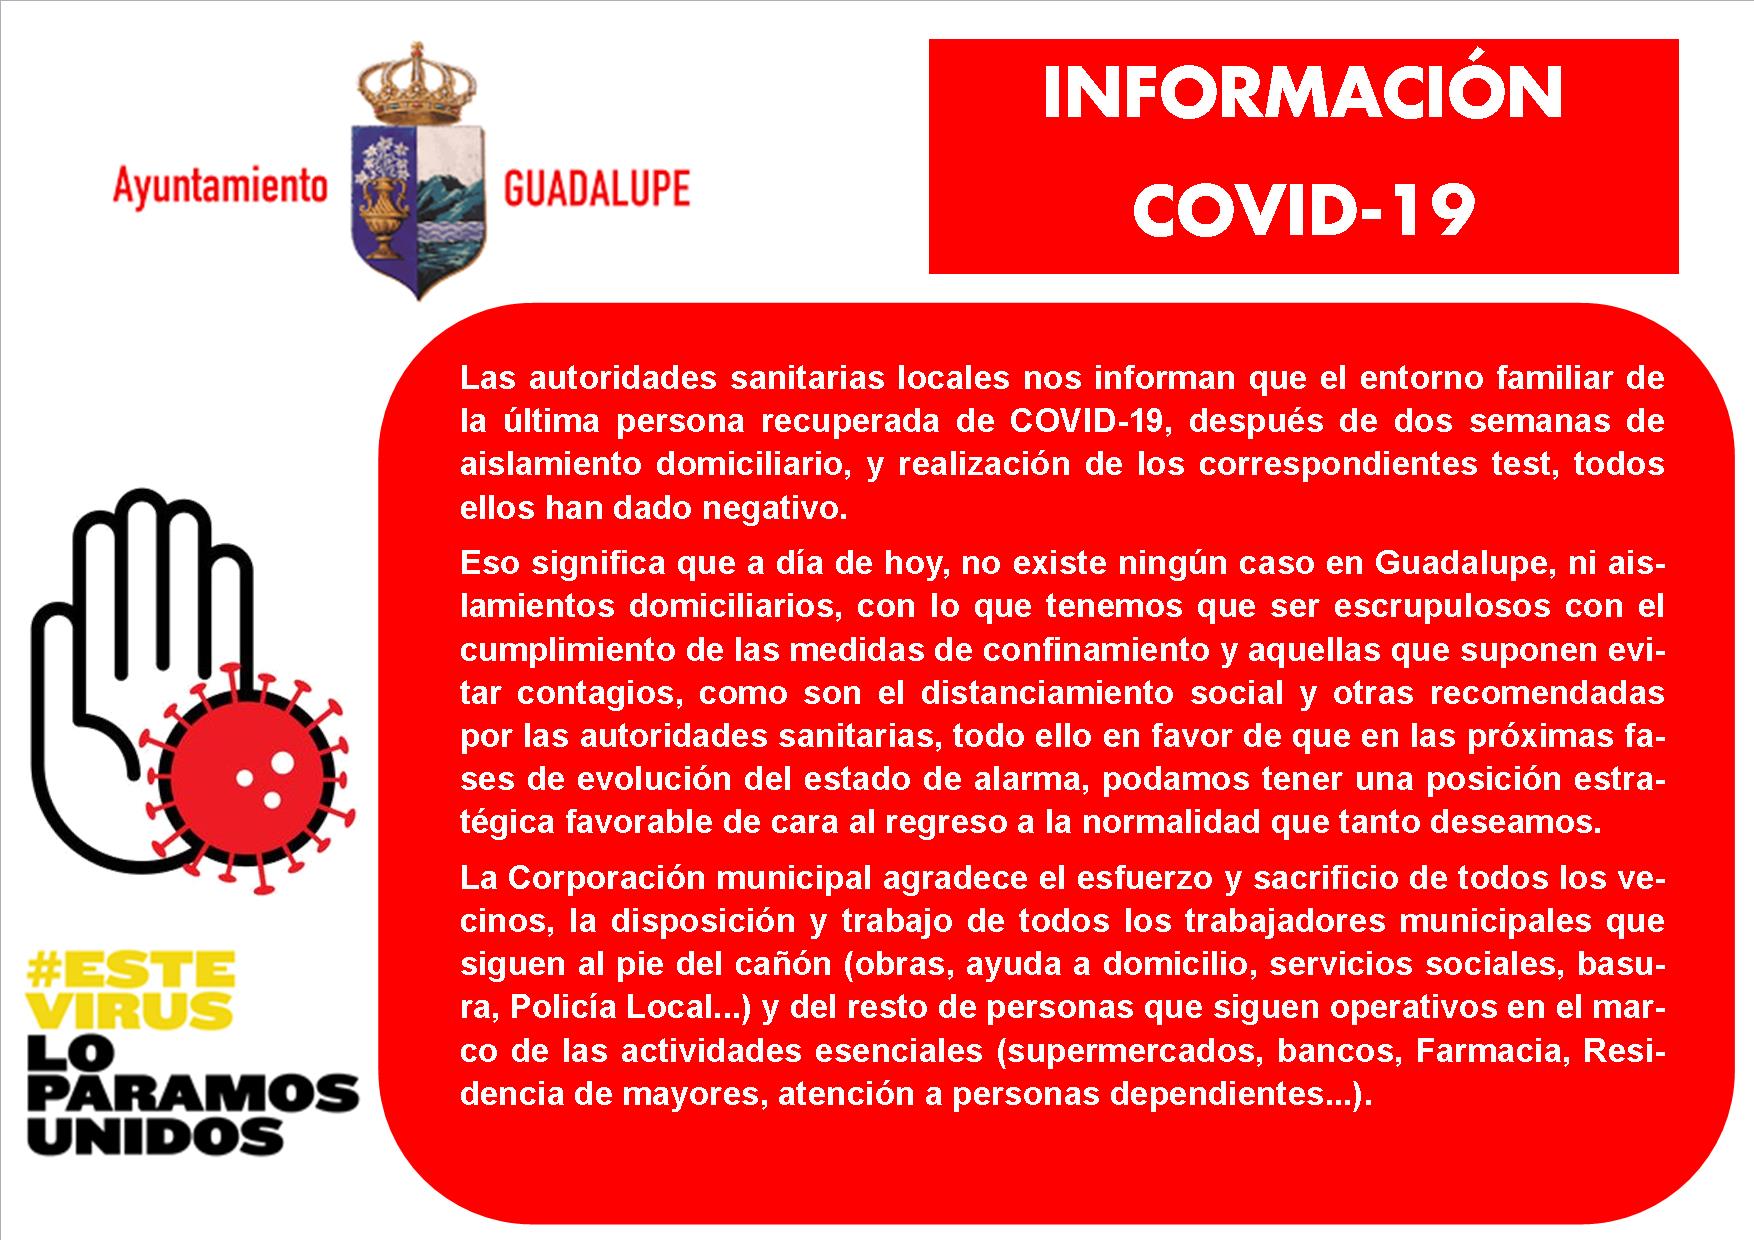 La familia del segundo recuperado por coronavirus dan negativo 2020 - Guadalupe (Cáceres)